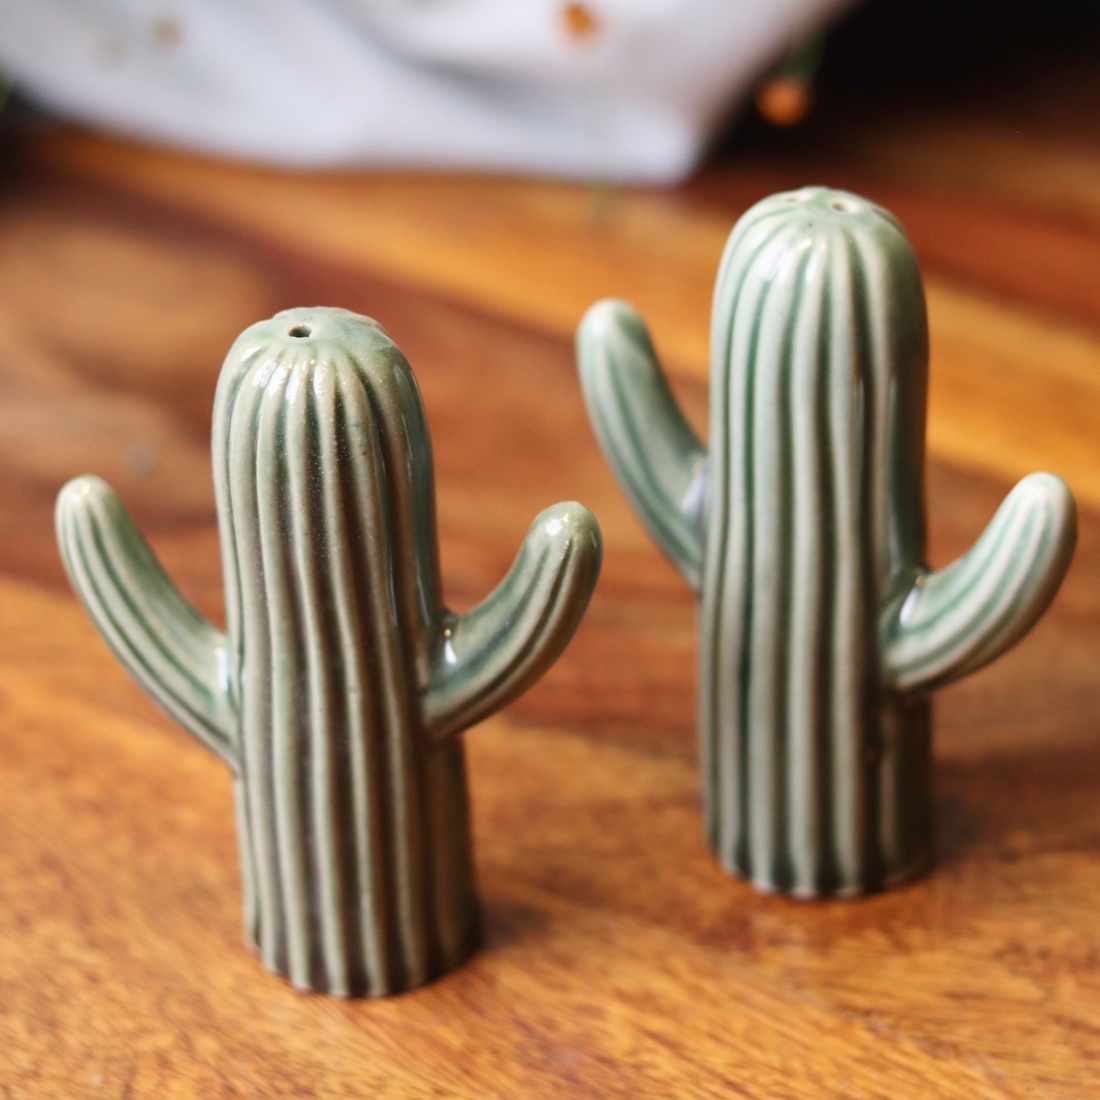 Cactus Salt & Pepper Shakers